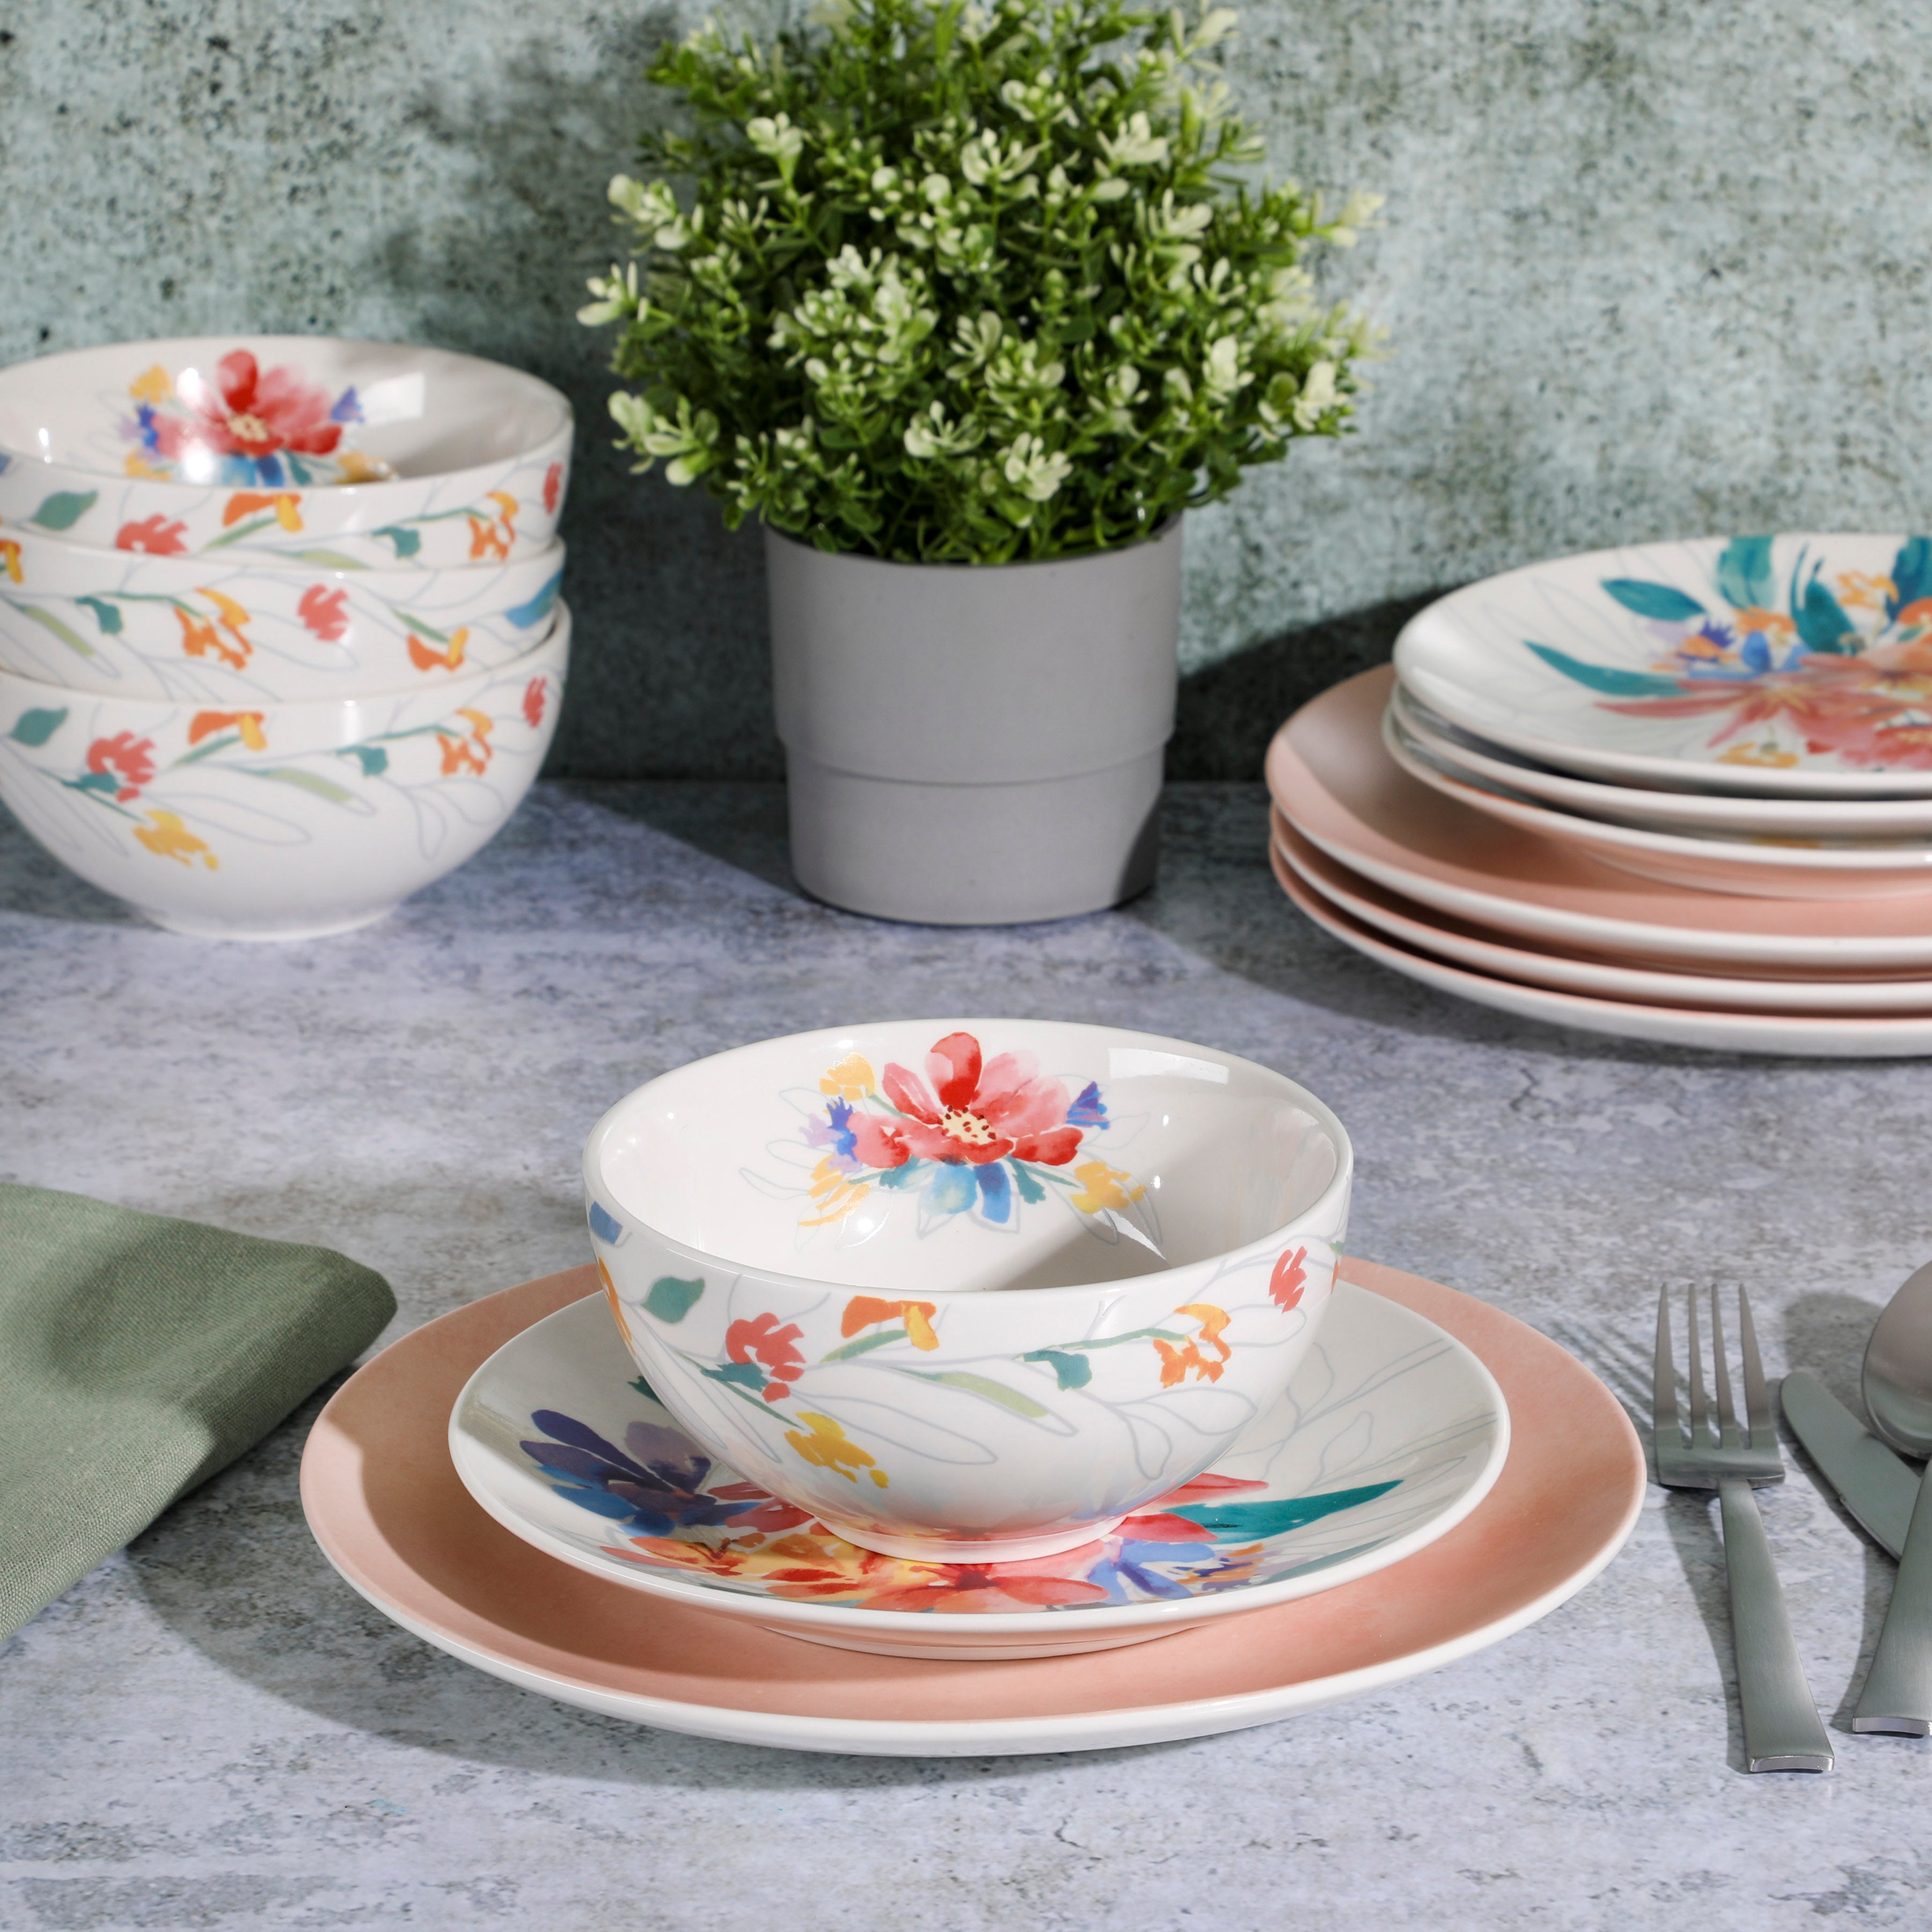 Spice by Tia Mowry Goji Blossom 12-Piece Decorated Porcelain Dinnerware Set